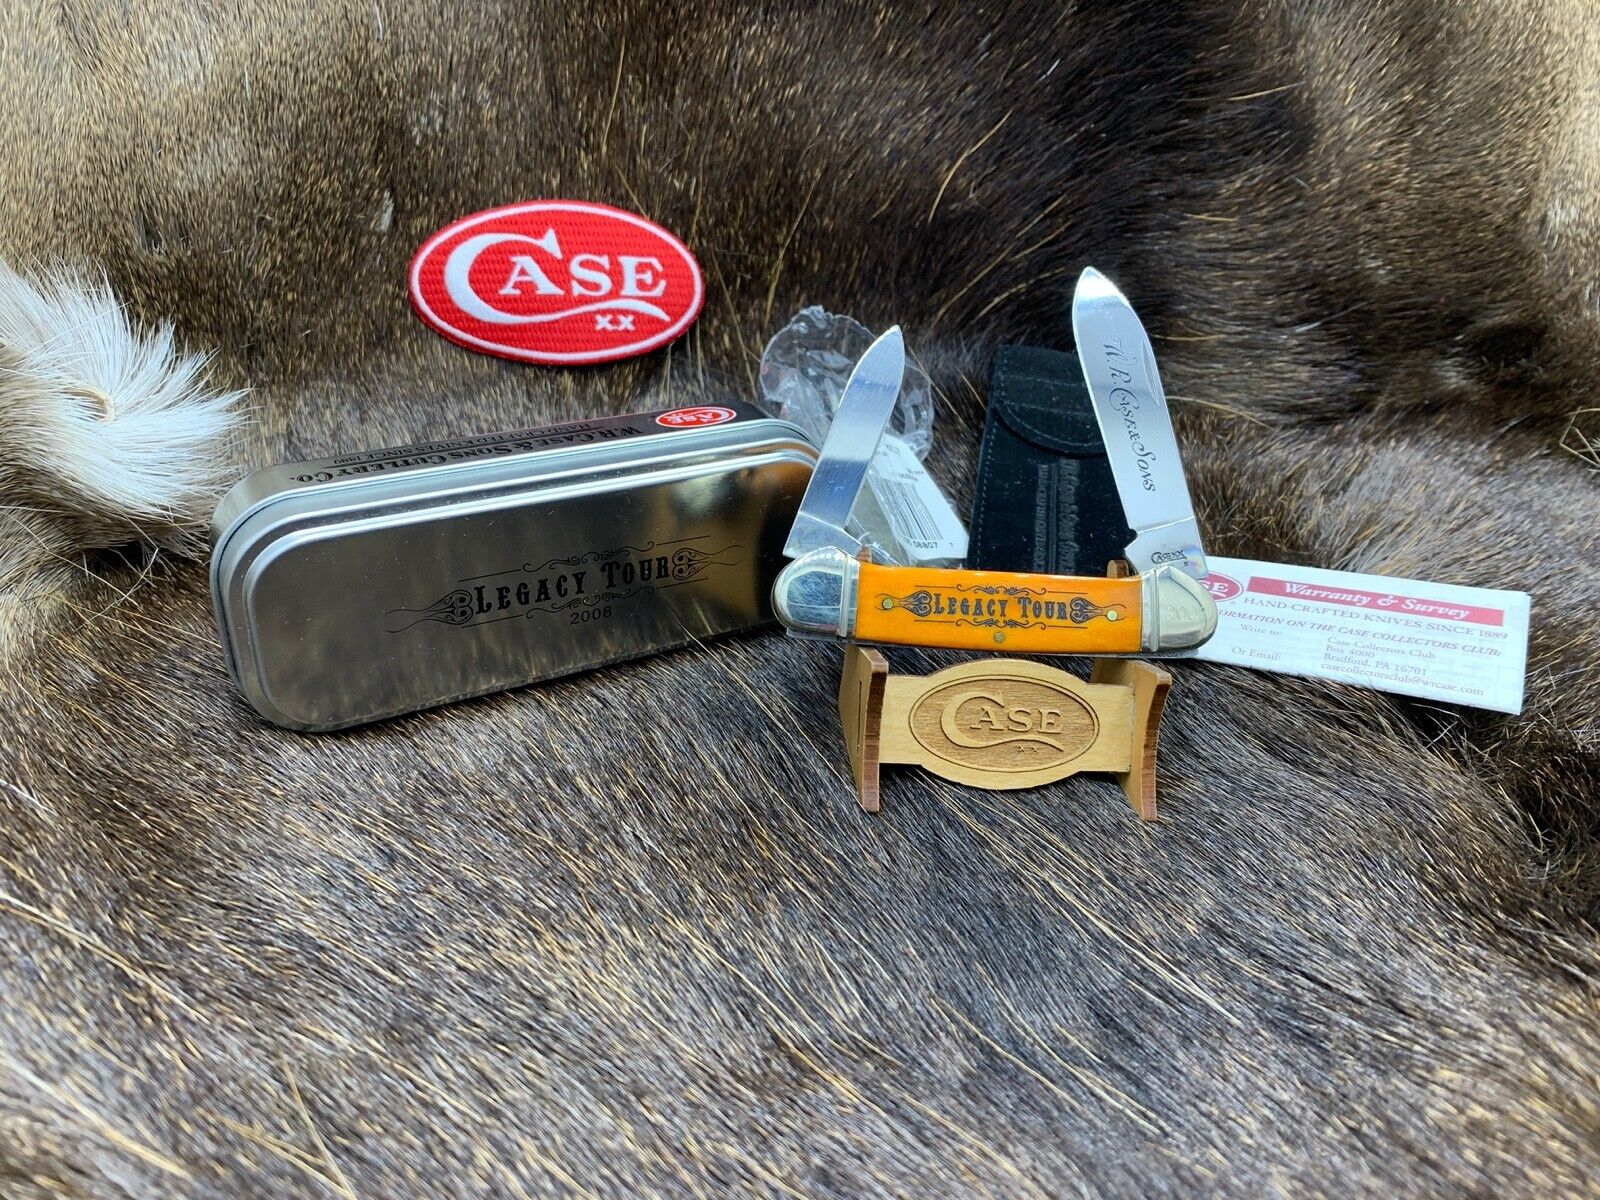 Case 2008 Case Legacy Tour 62131 SS Canoe Knife Orange Handles Mint In Tin - 47C